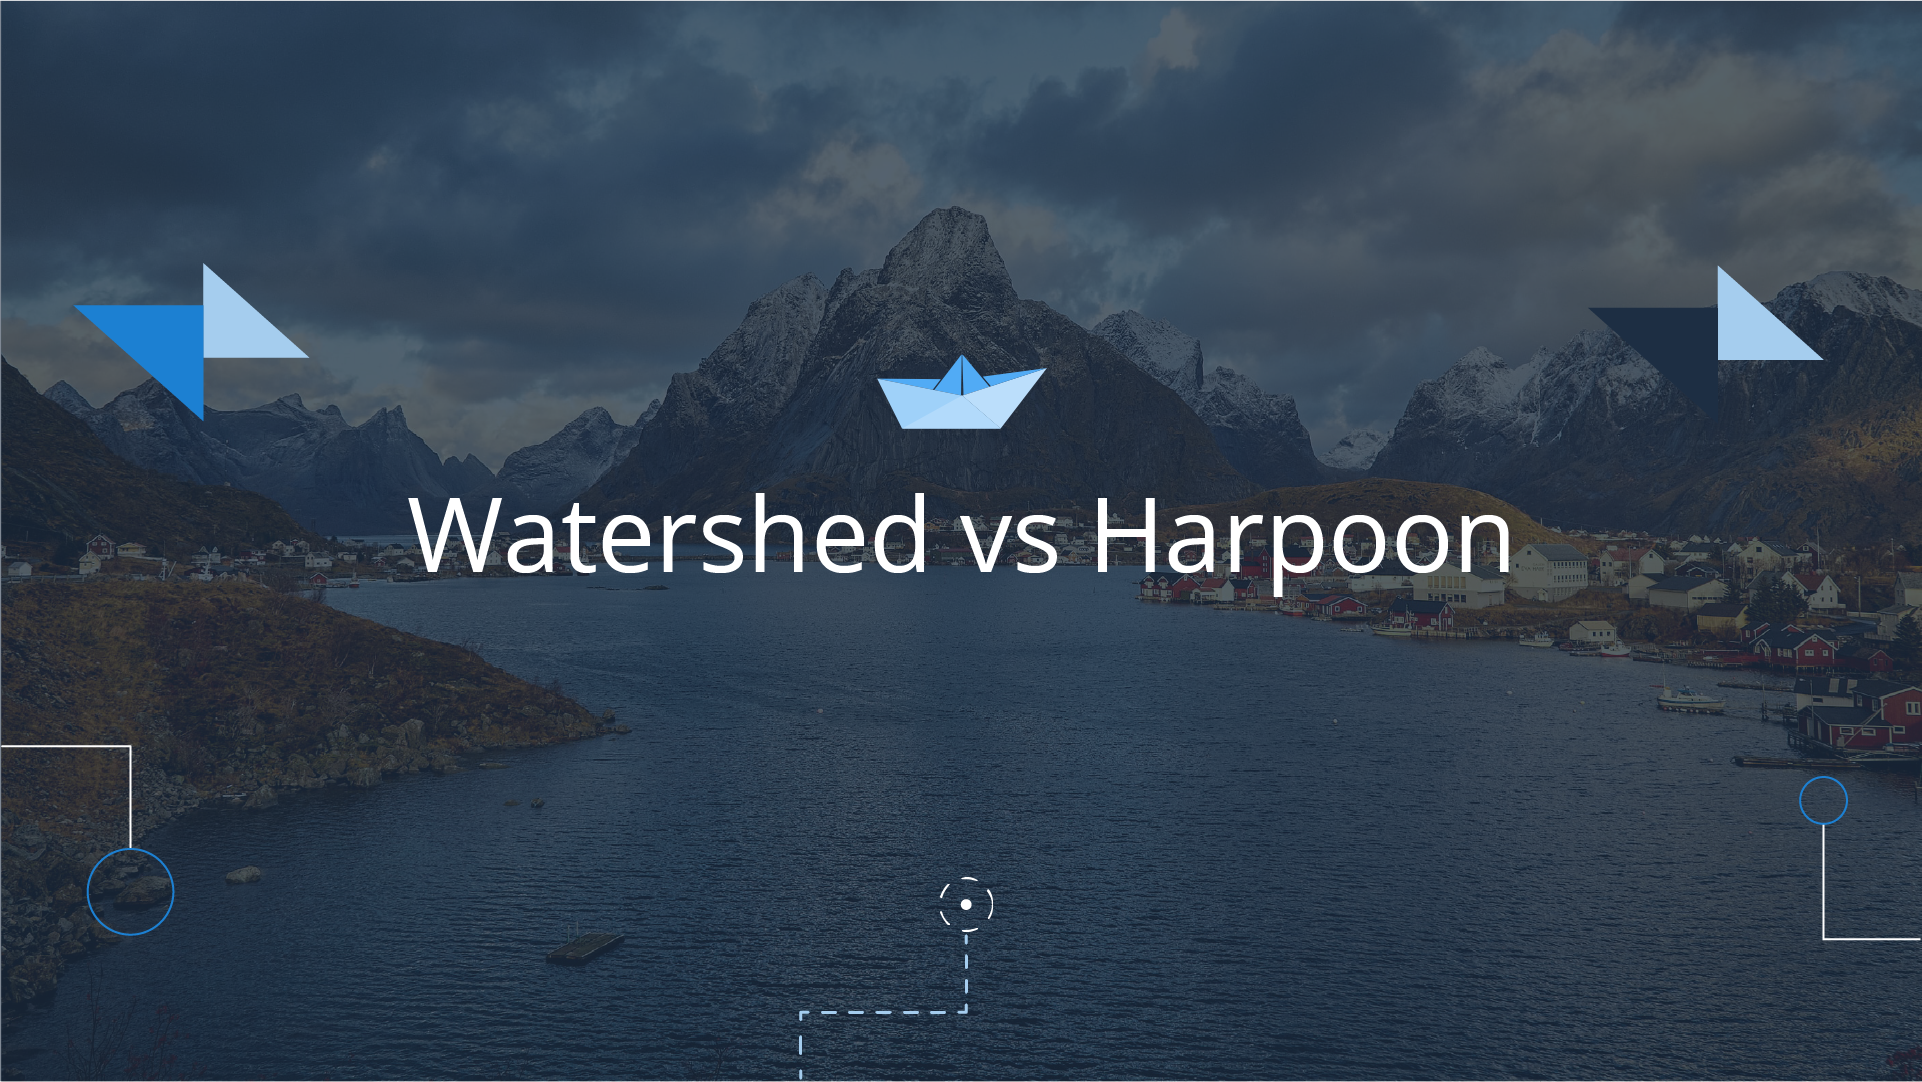 Watershed vs Harpoon | Manolin Software